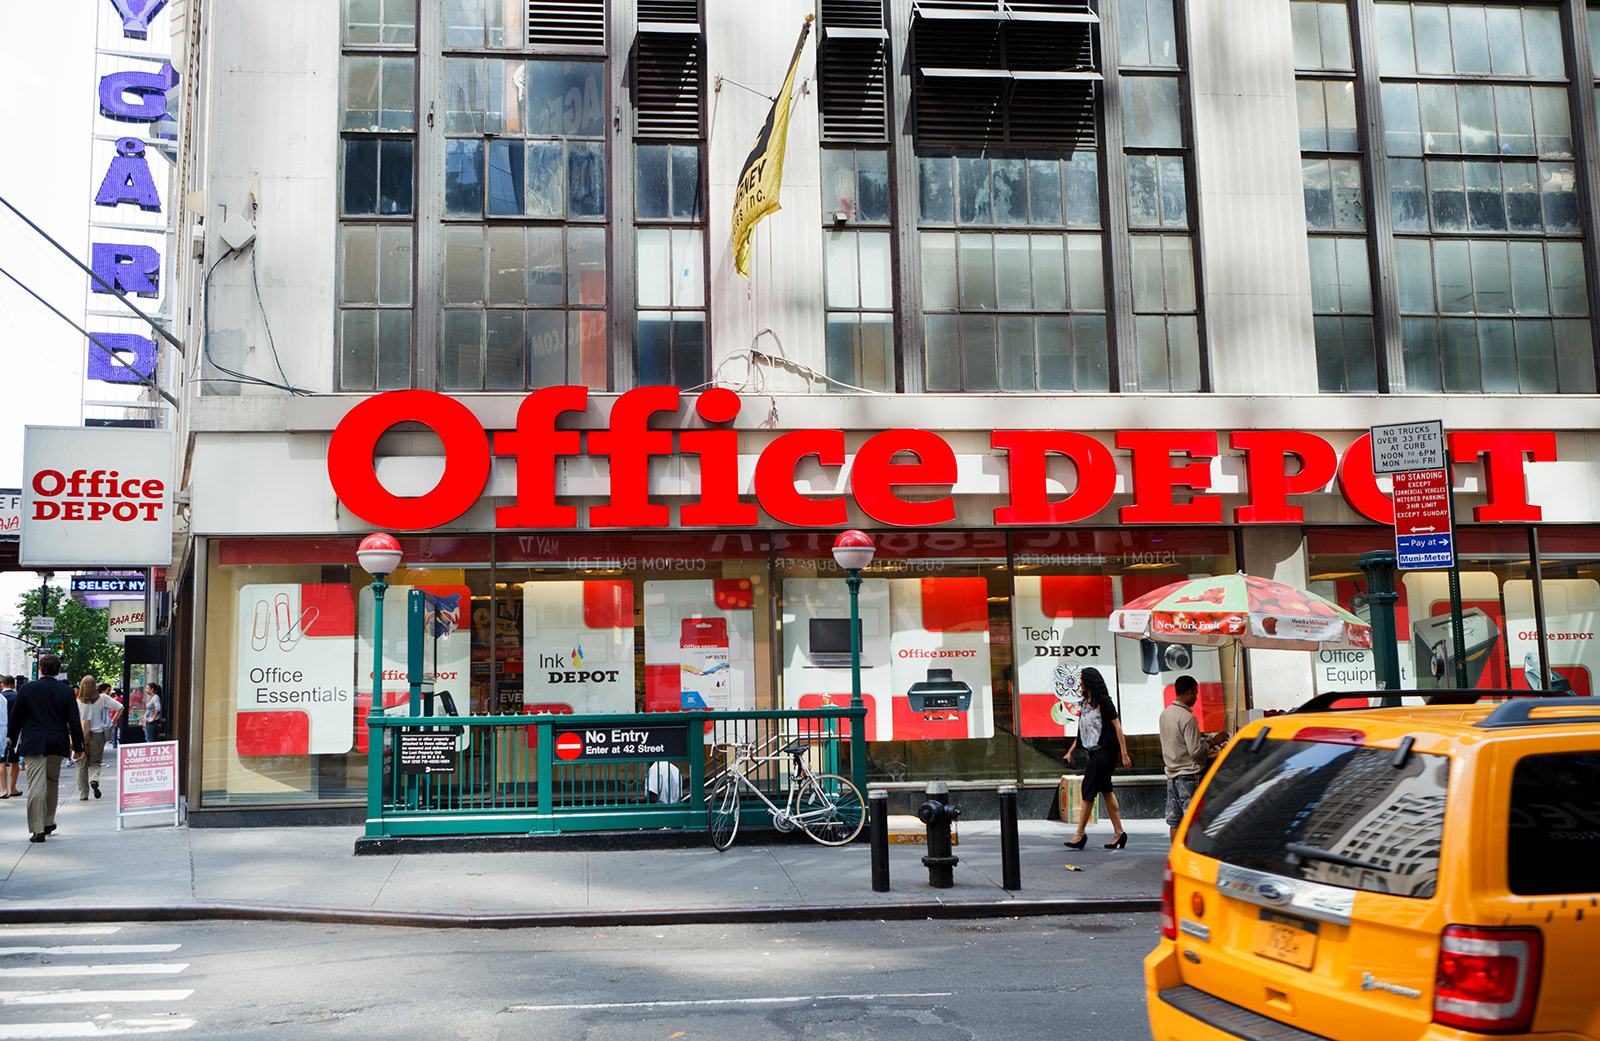 Office Depot in Midtown Manhattan, NYC.